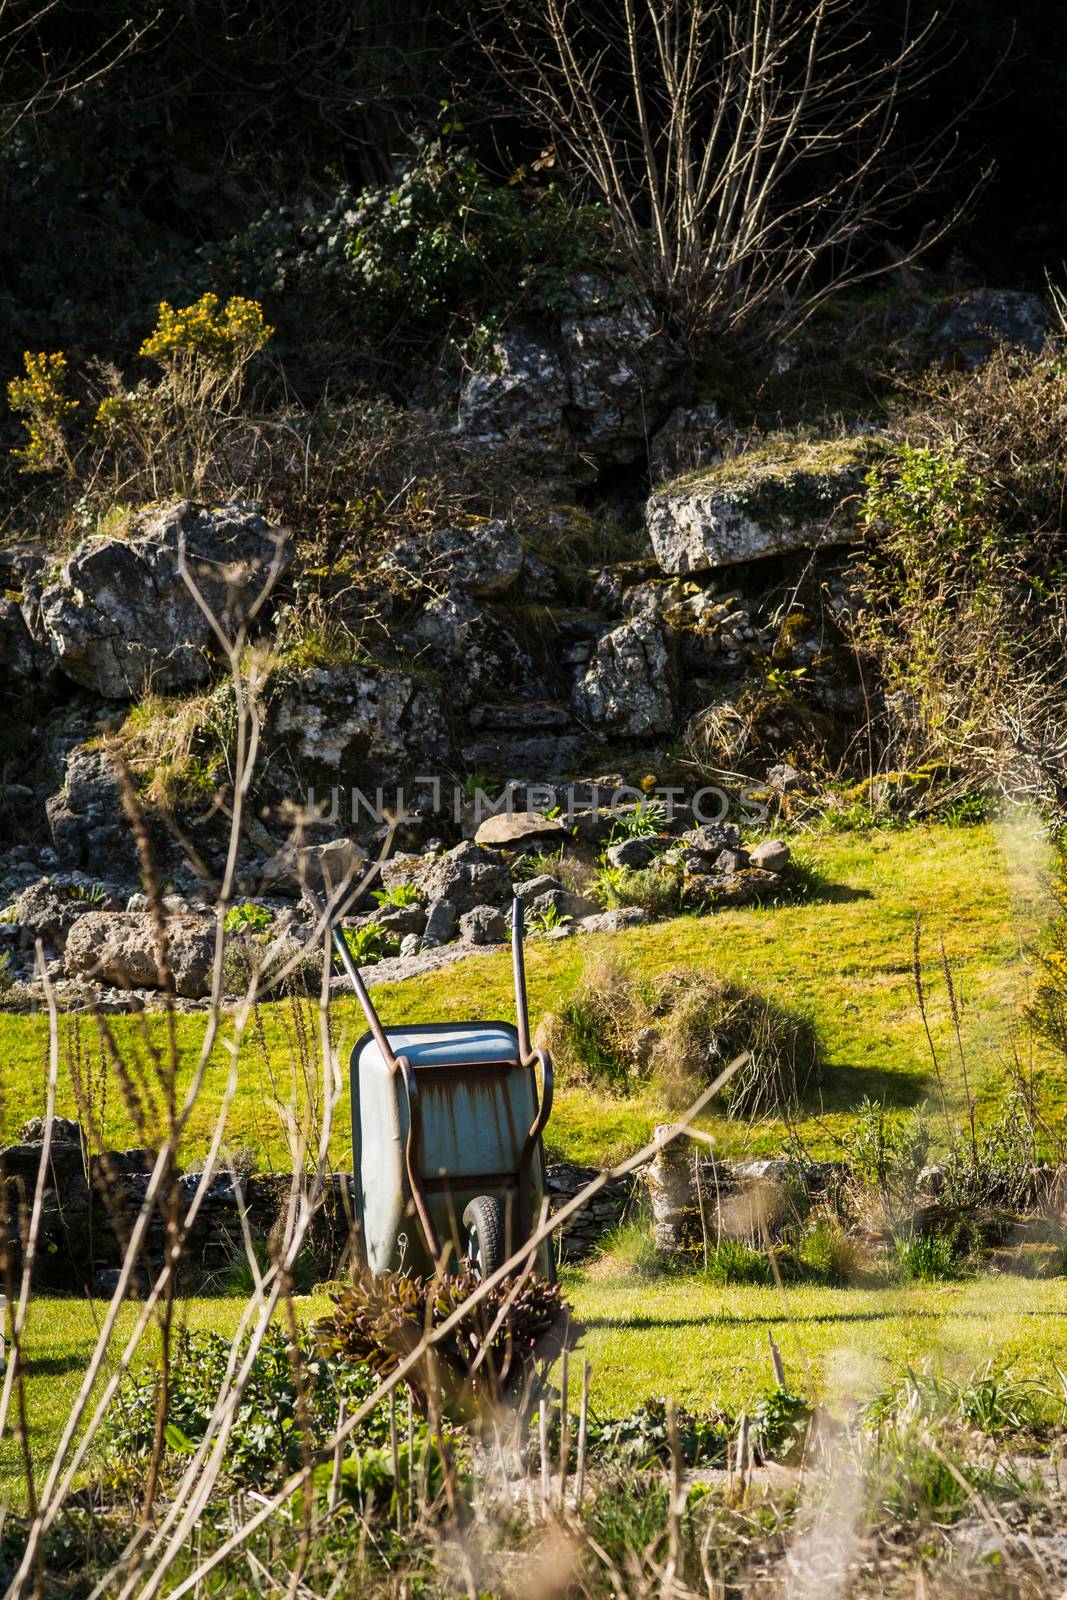 old wheelbarrow and gardening tools in Springtime by paddythegolfer